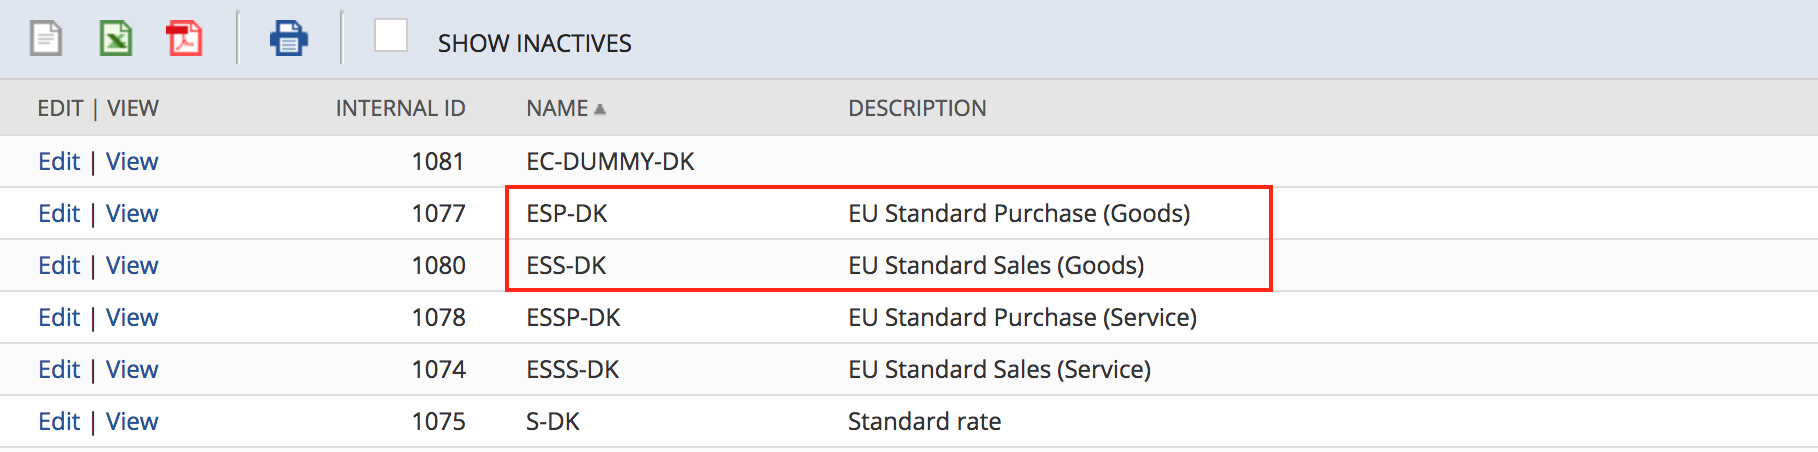 Split ES-DK tax code settings, ESS-DK for sales, ESP-DK for purchases.